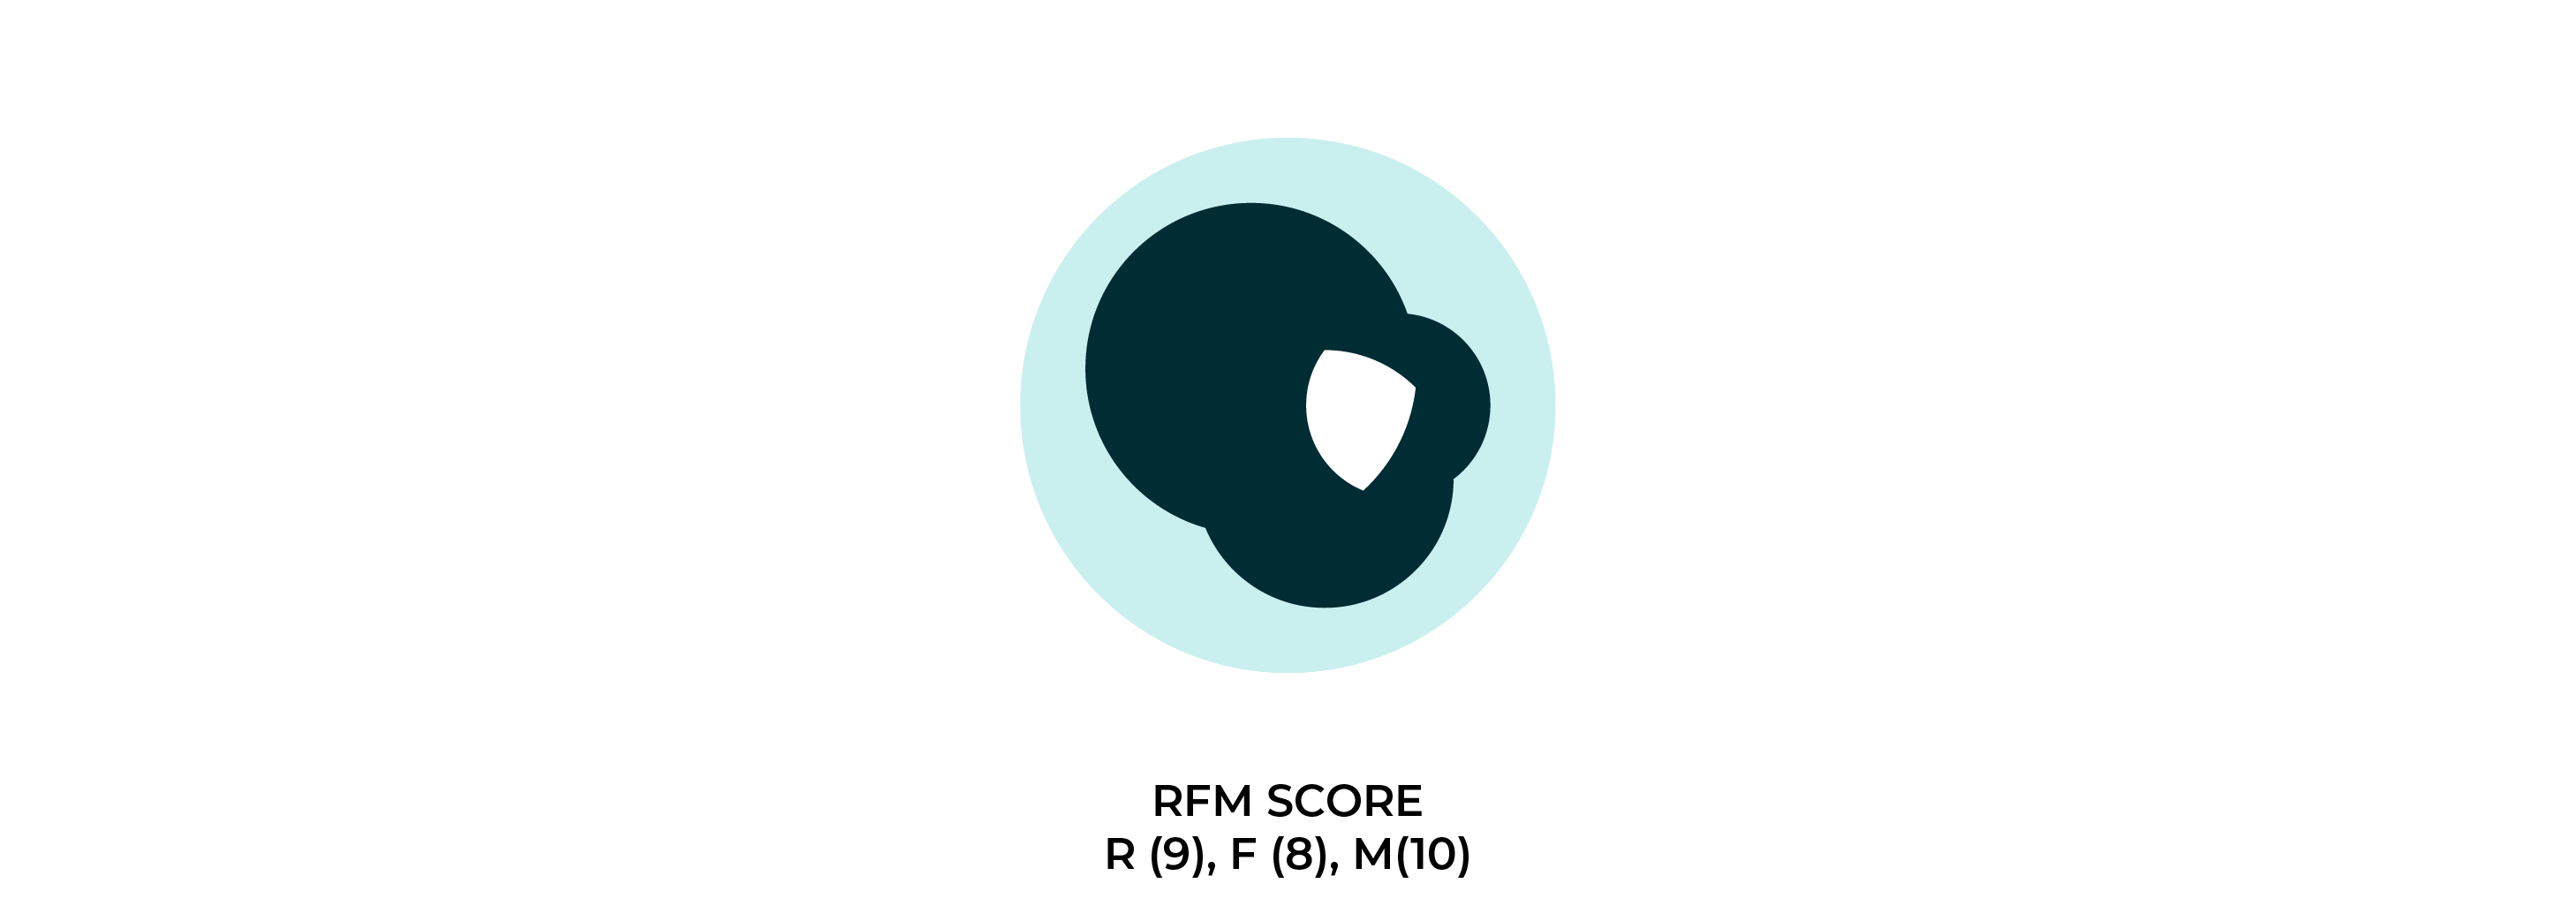 Each individual RFM score contributes to the combined RFM score.